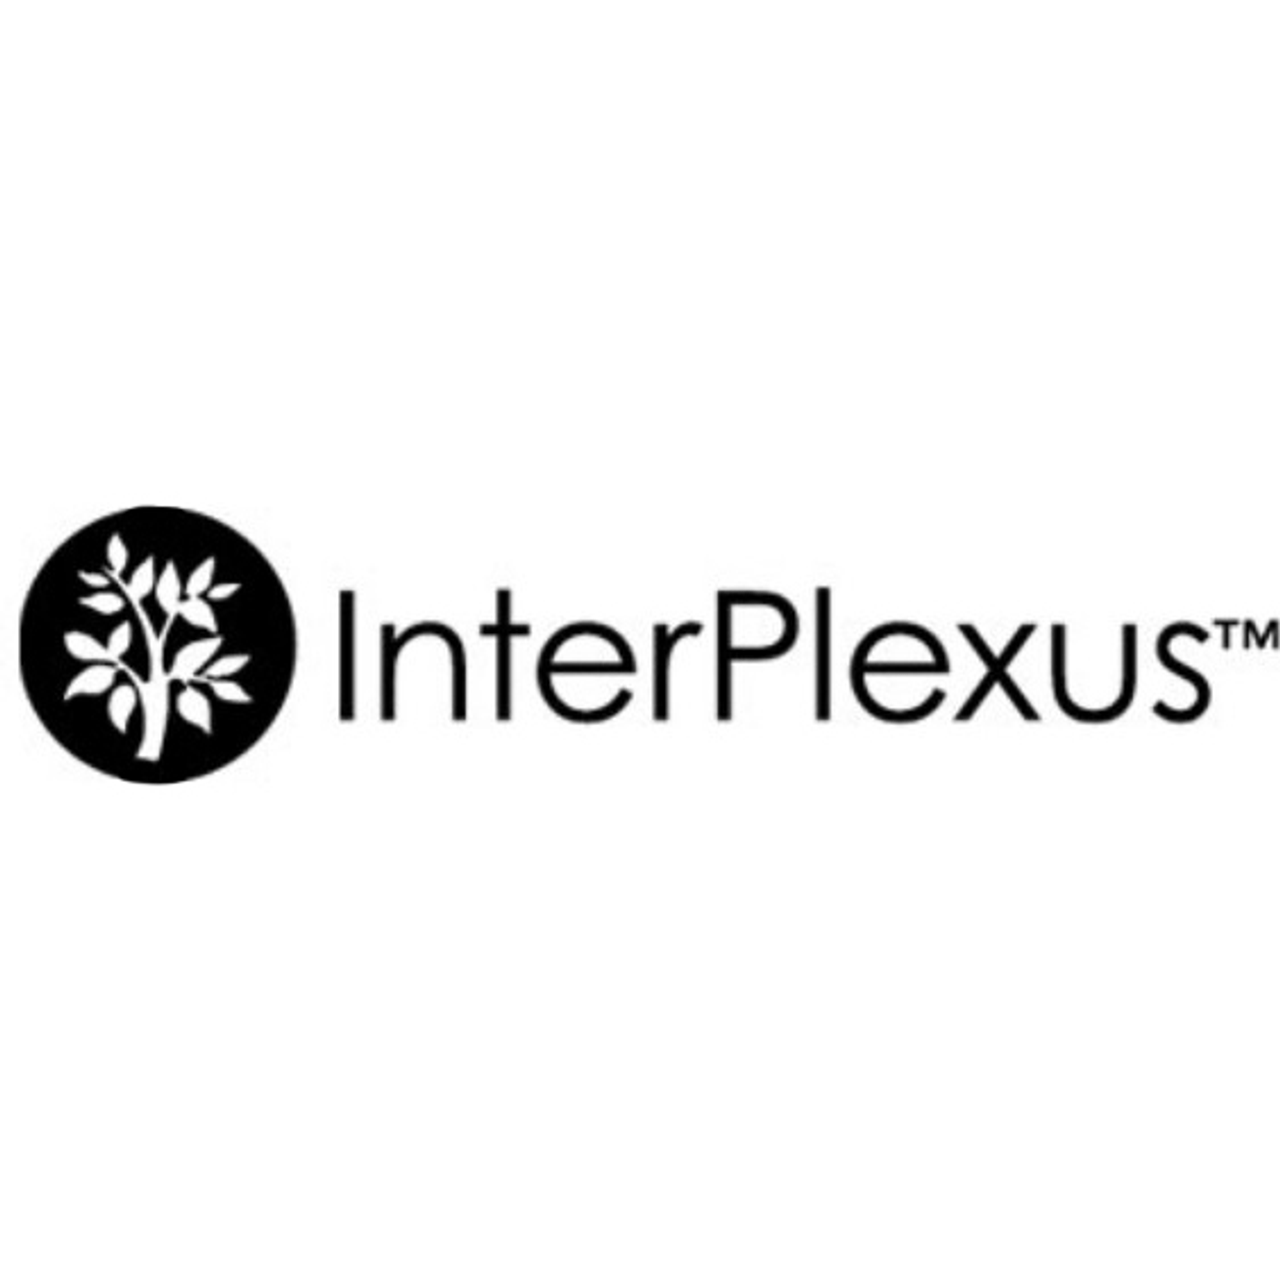 InterPlexus